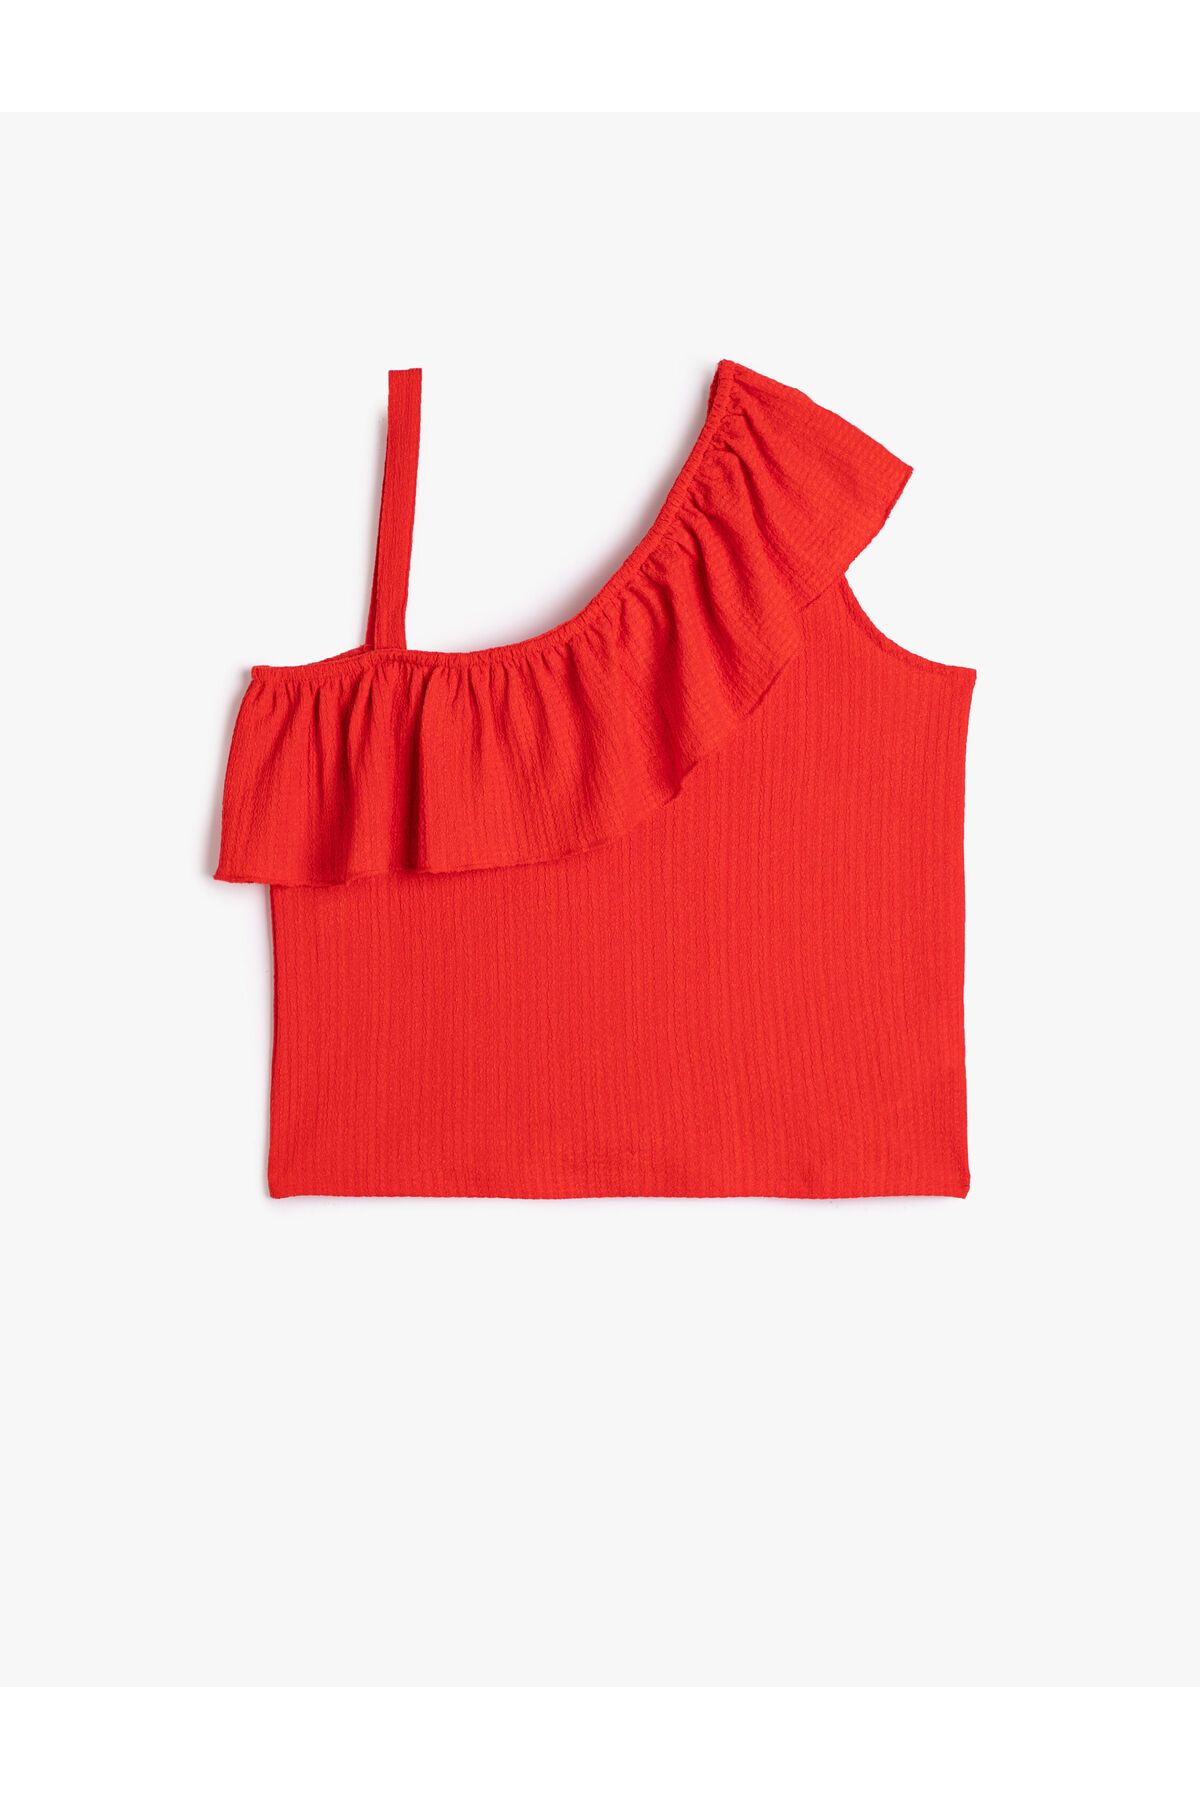 Koton Düz Kırmızı Kız Çocuk T-Shirt 3SKG10140AK